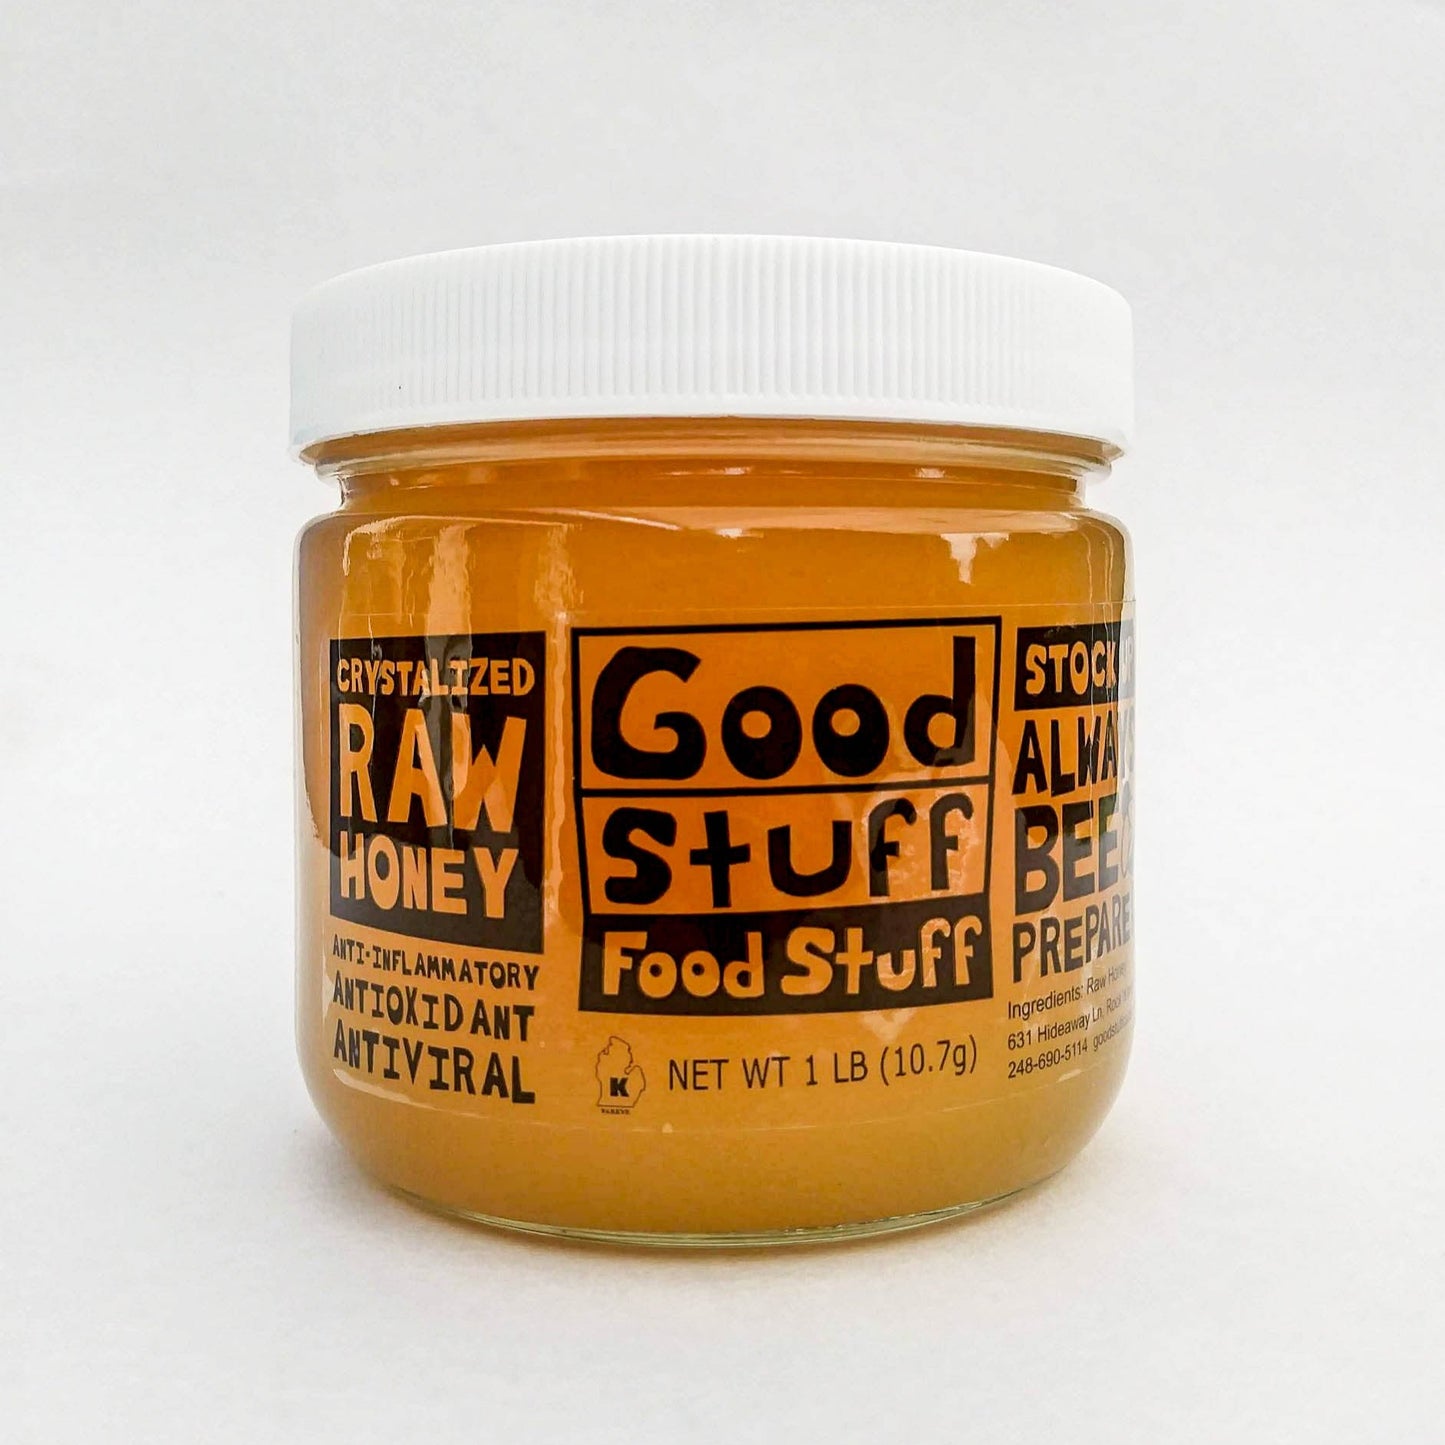 Crystalized Raw Honey